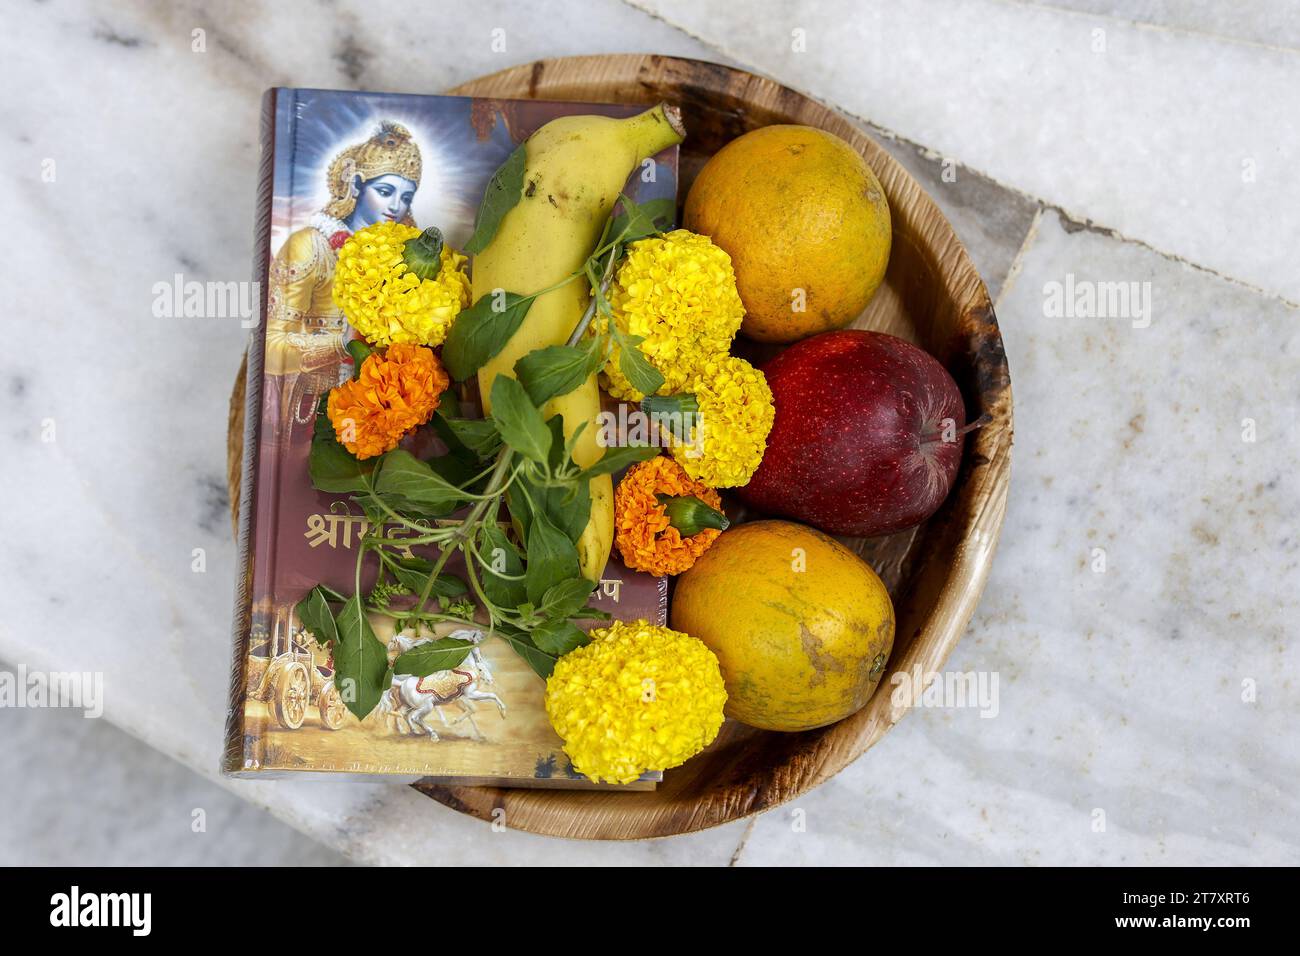 Offerings at ISKCON temple, flowers, fruit and Bhagavad Gita in Juhu, Mumbai, India, Asia Stock Photo